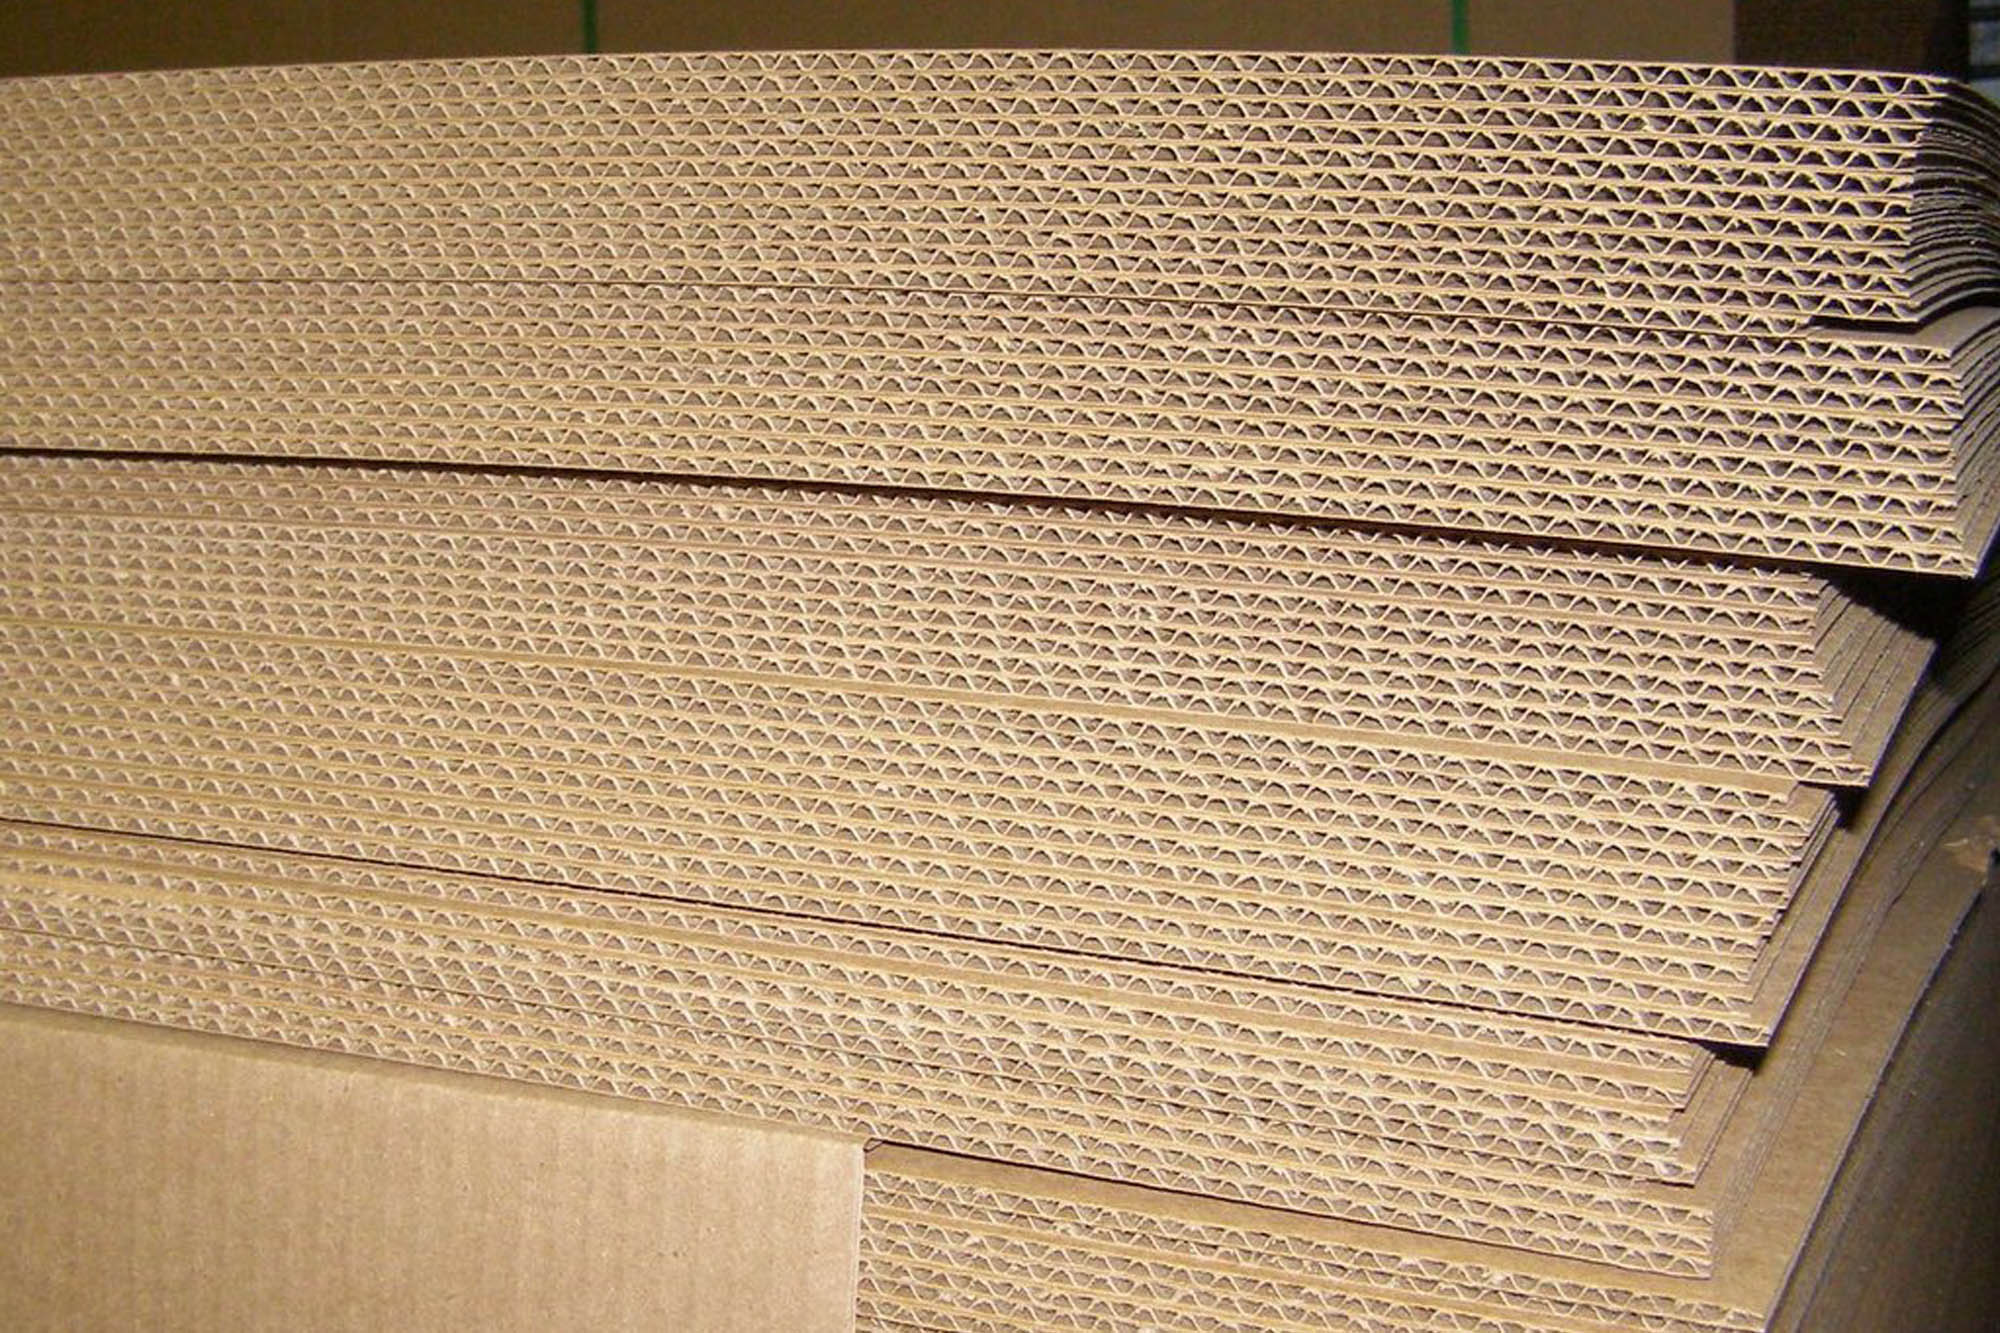 Corrugated card board sheets